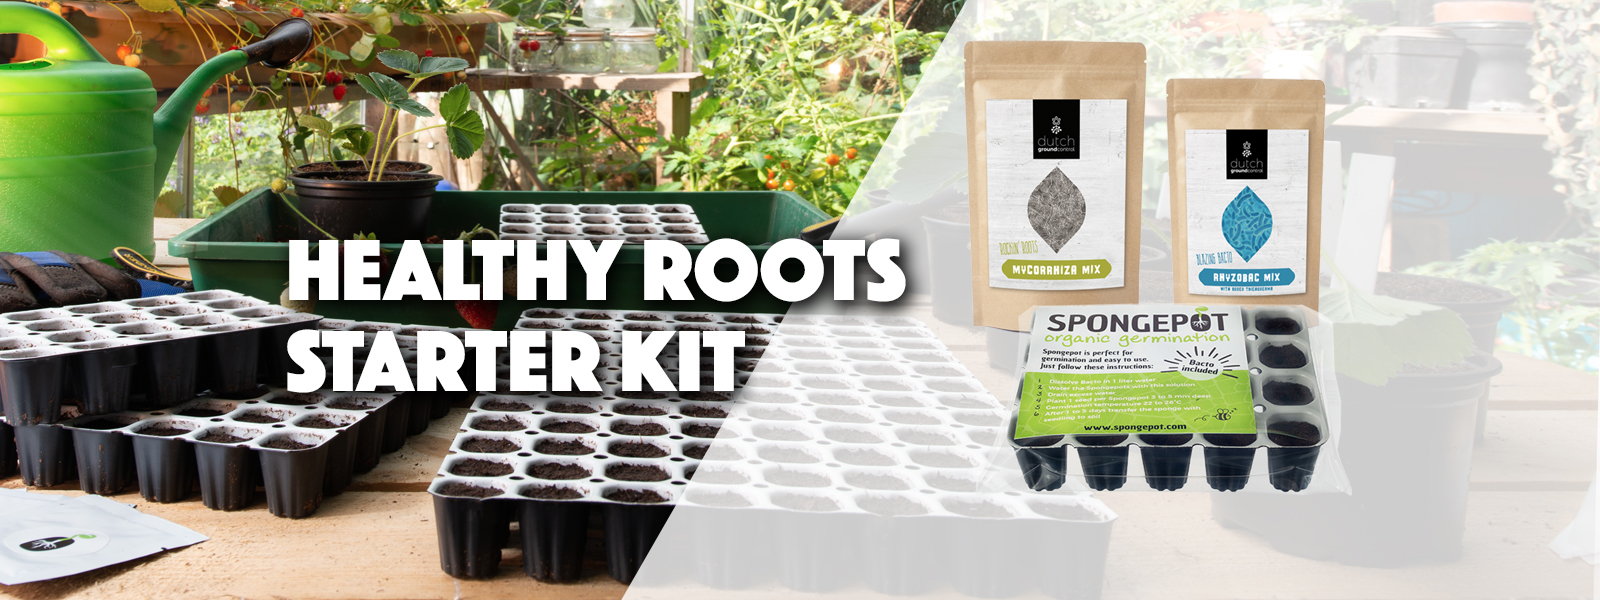 Healty Roots Starter Kit 